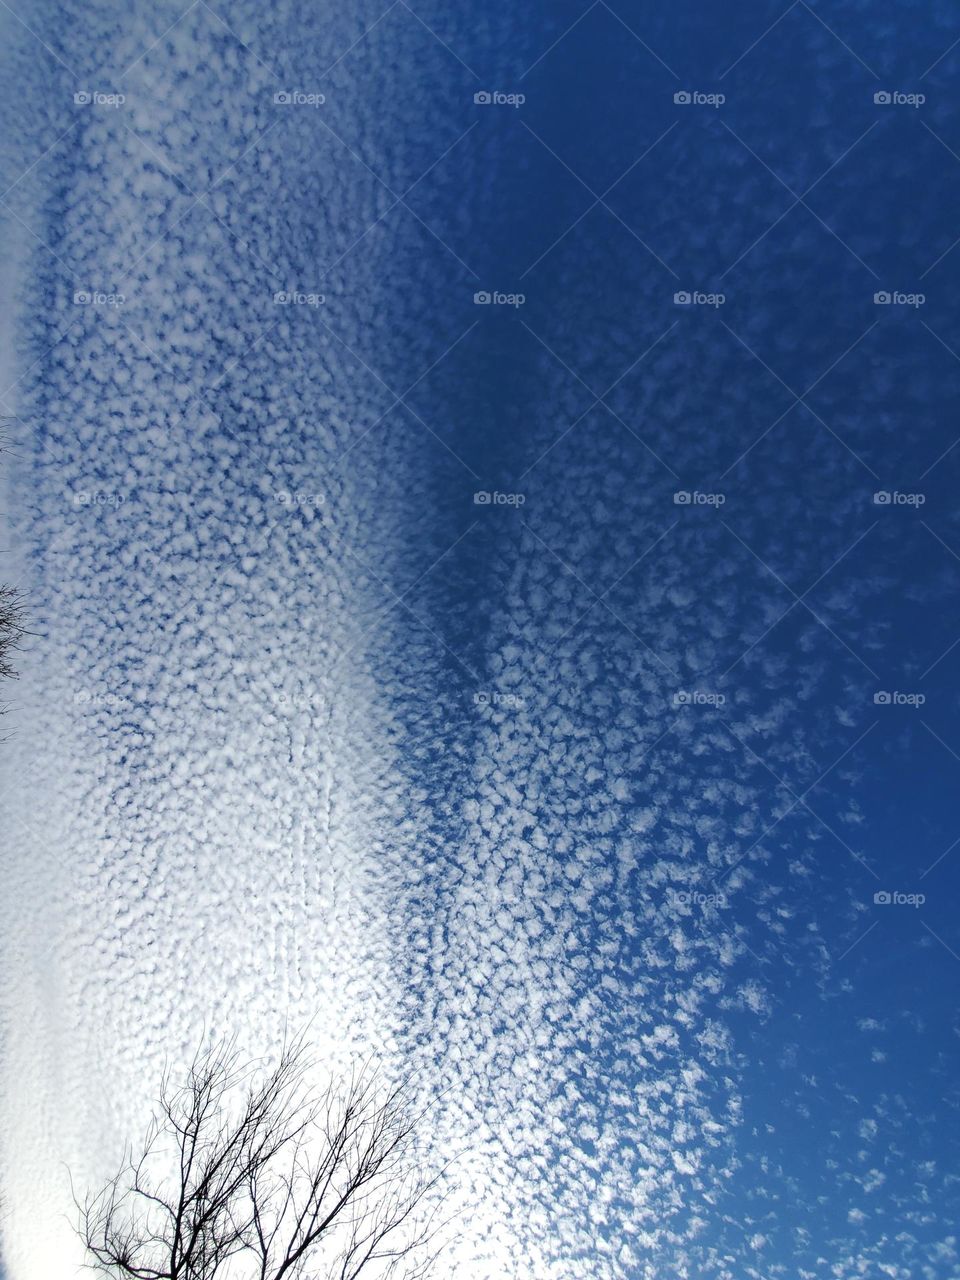 Minimalist cloud photo showing off nature's natural design.